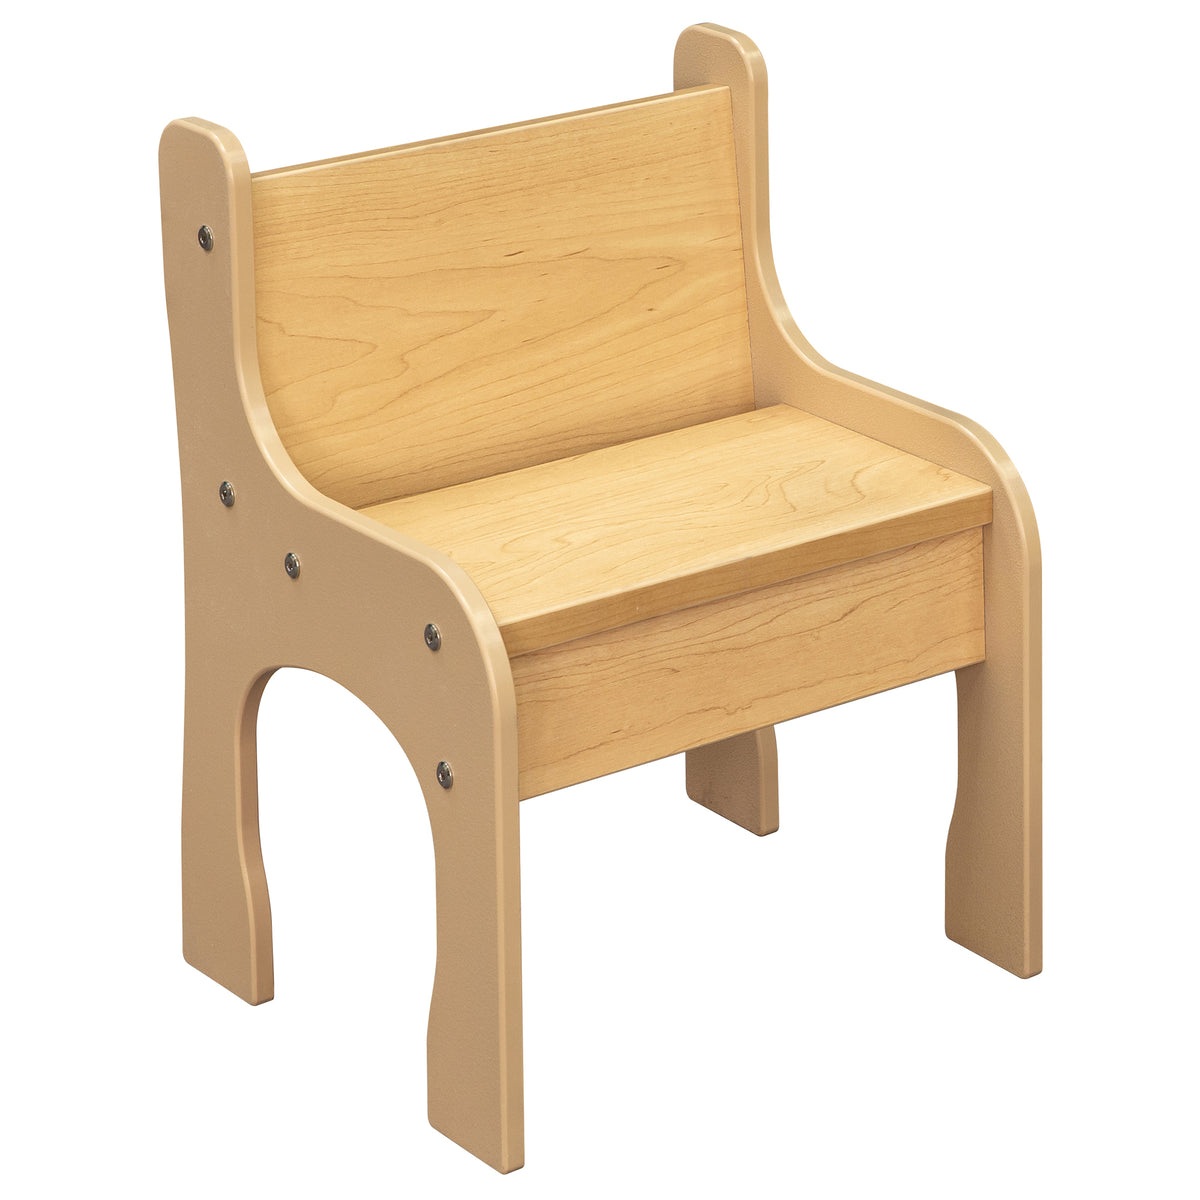 Ten Inch Maple Wood Chair.